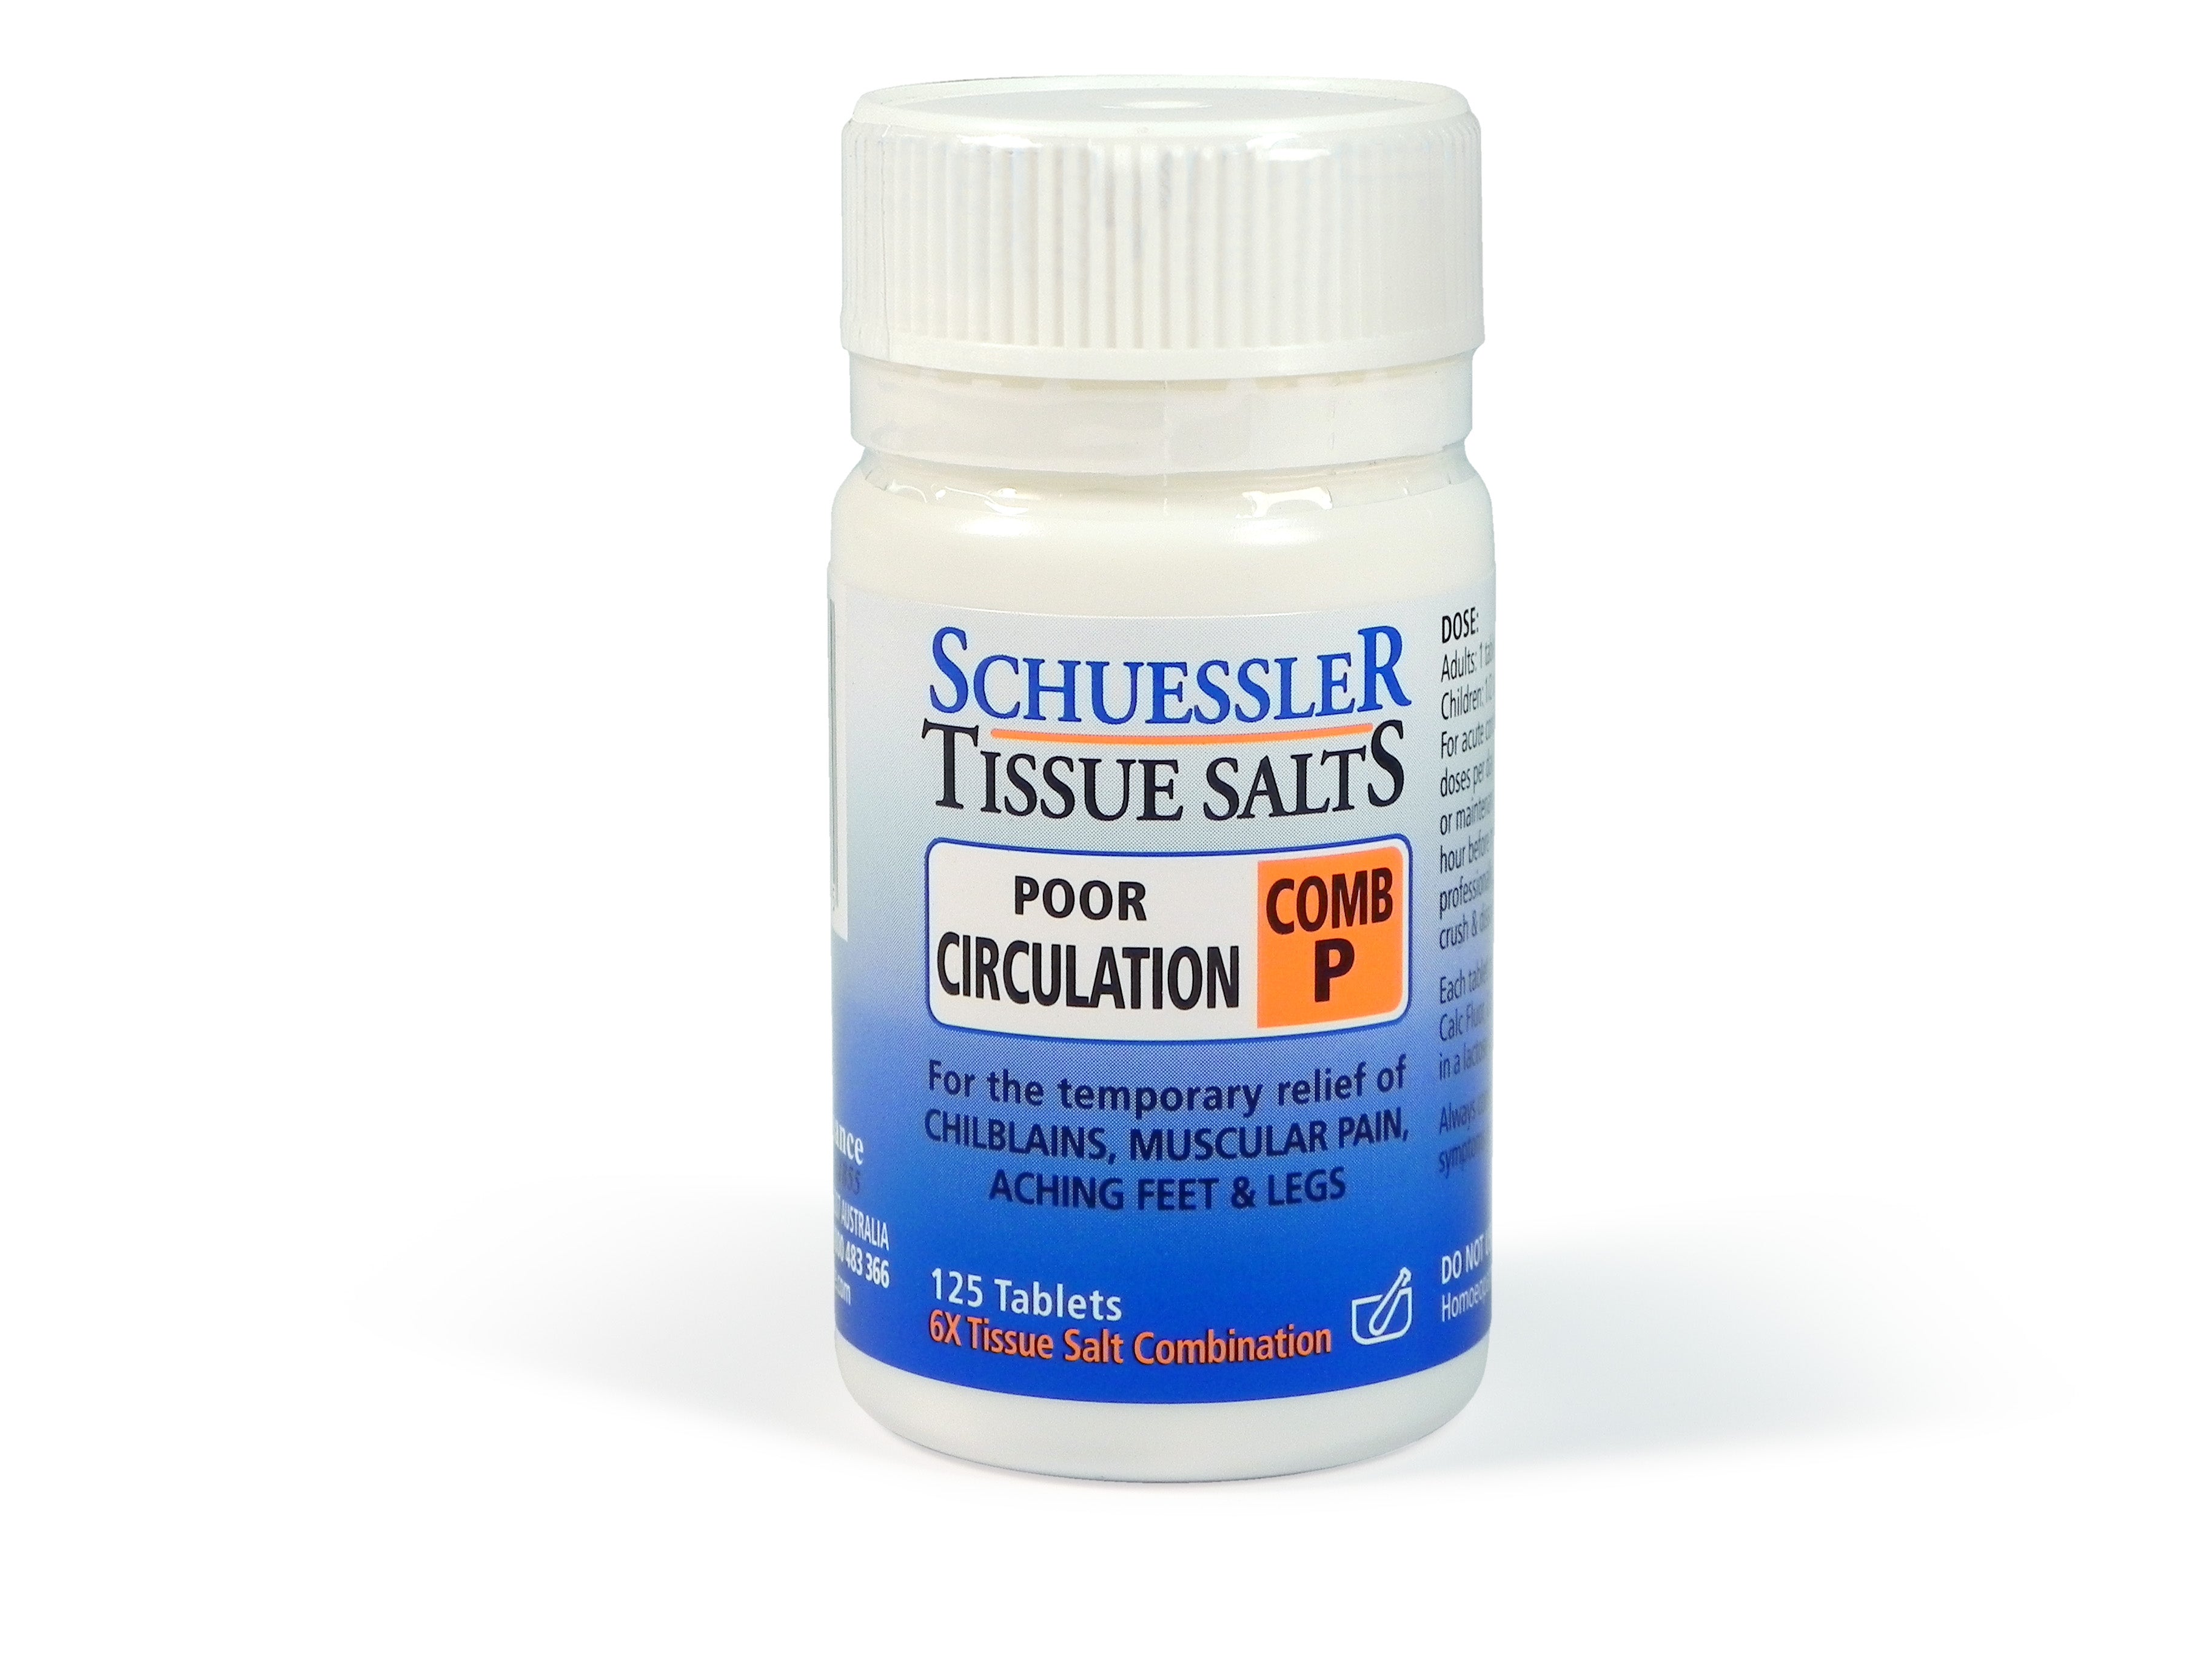 Schuessler Tissue Salts - Comb P